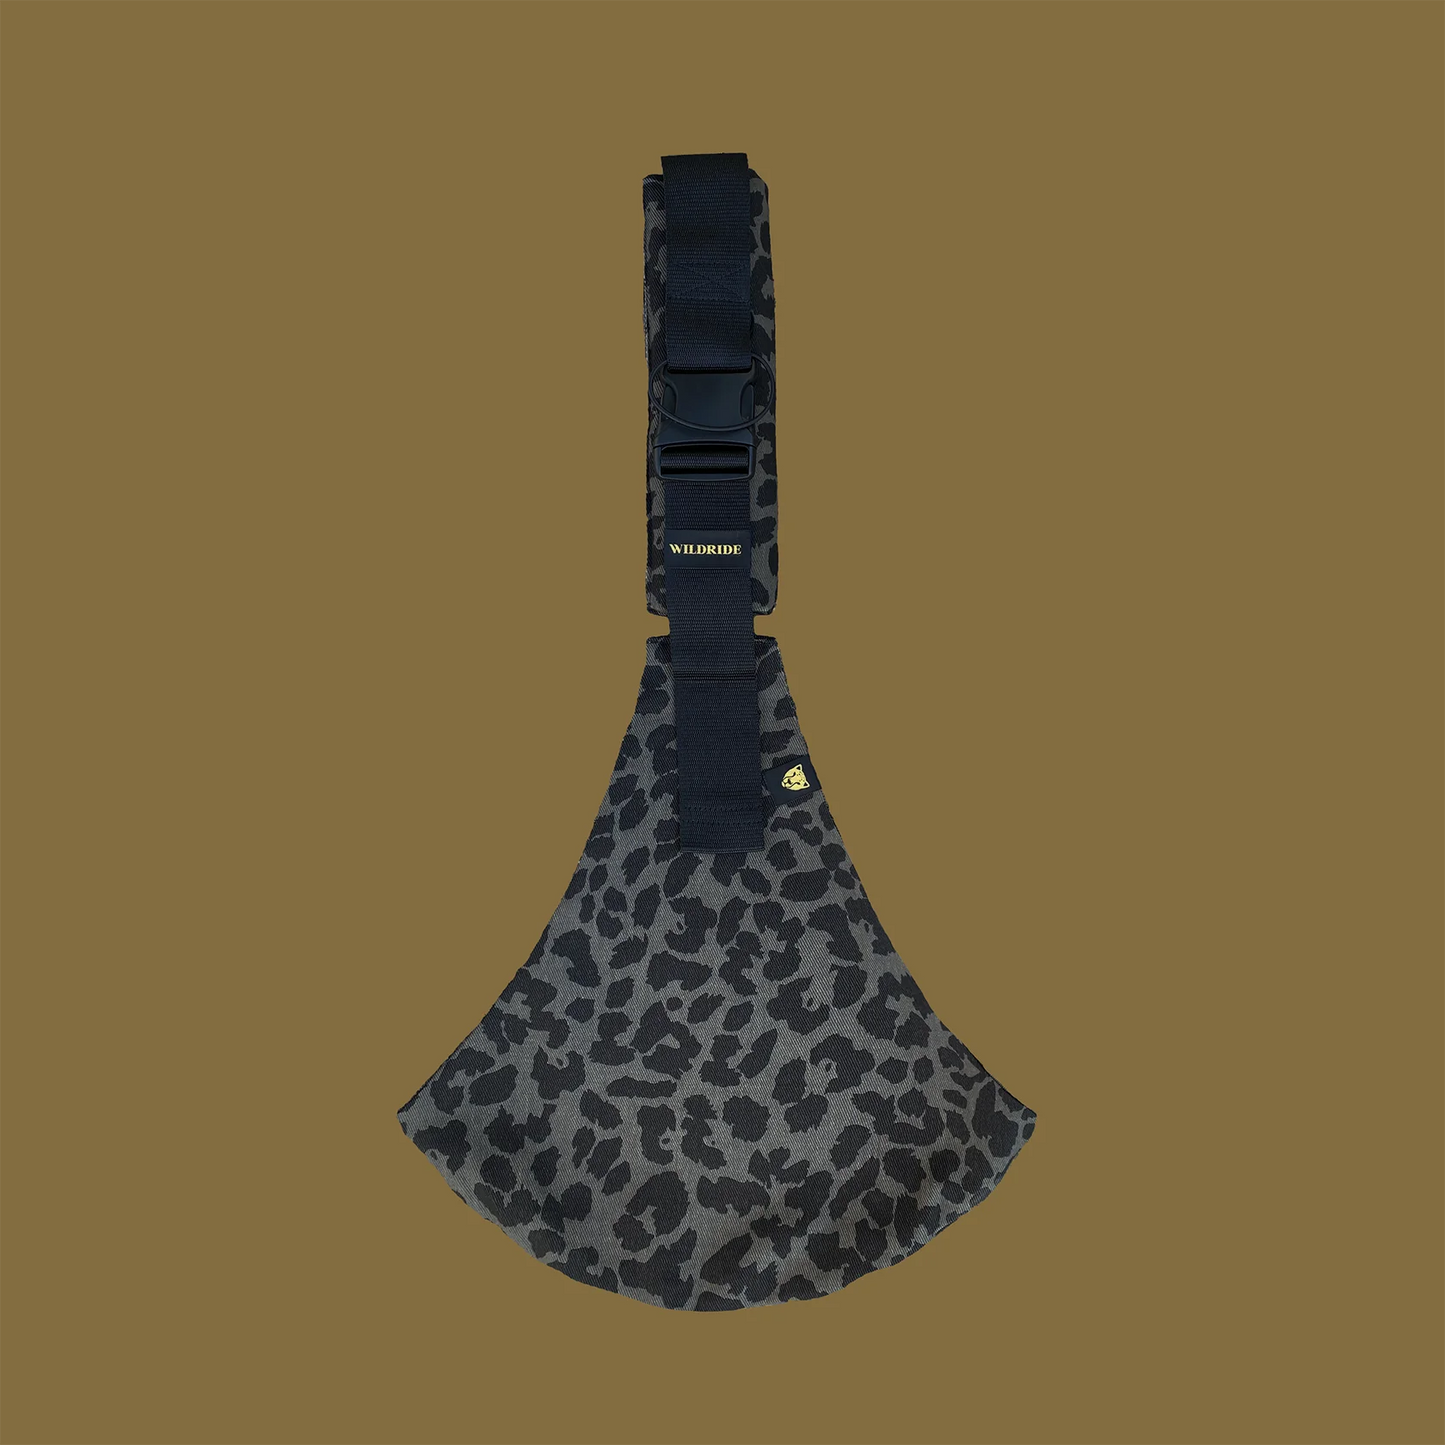 Wildride Leopard Grau